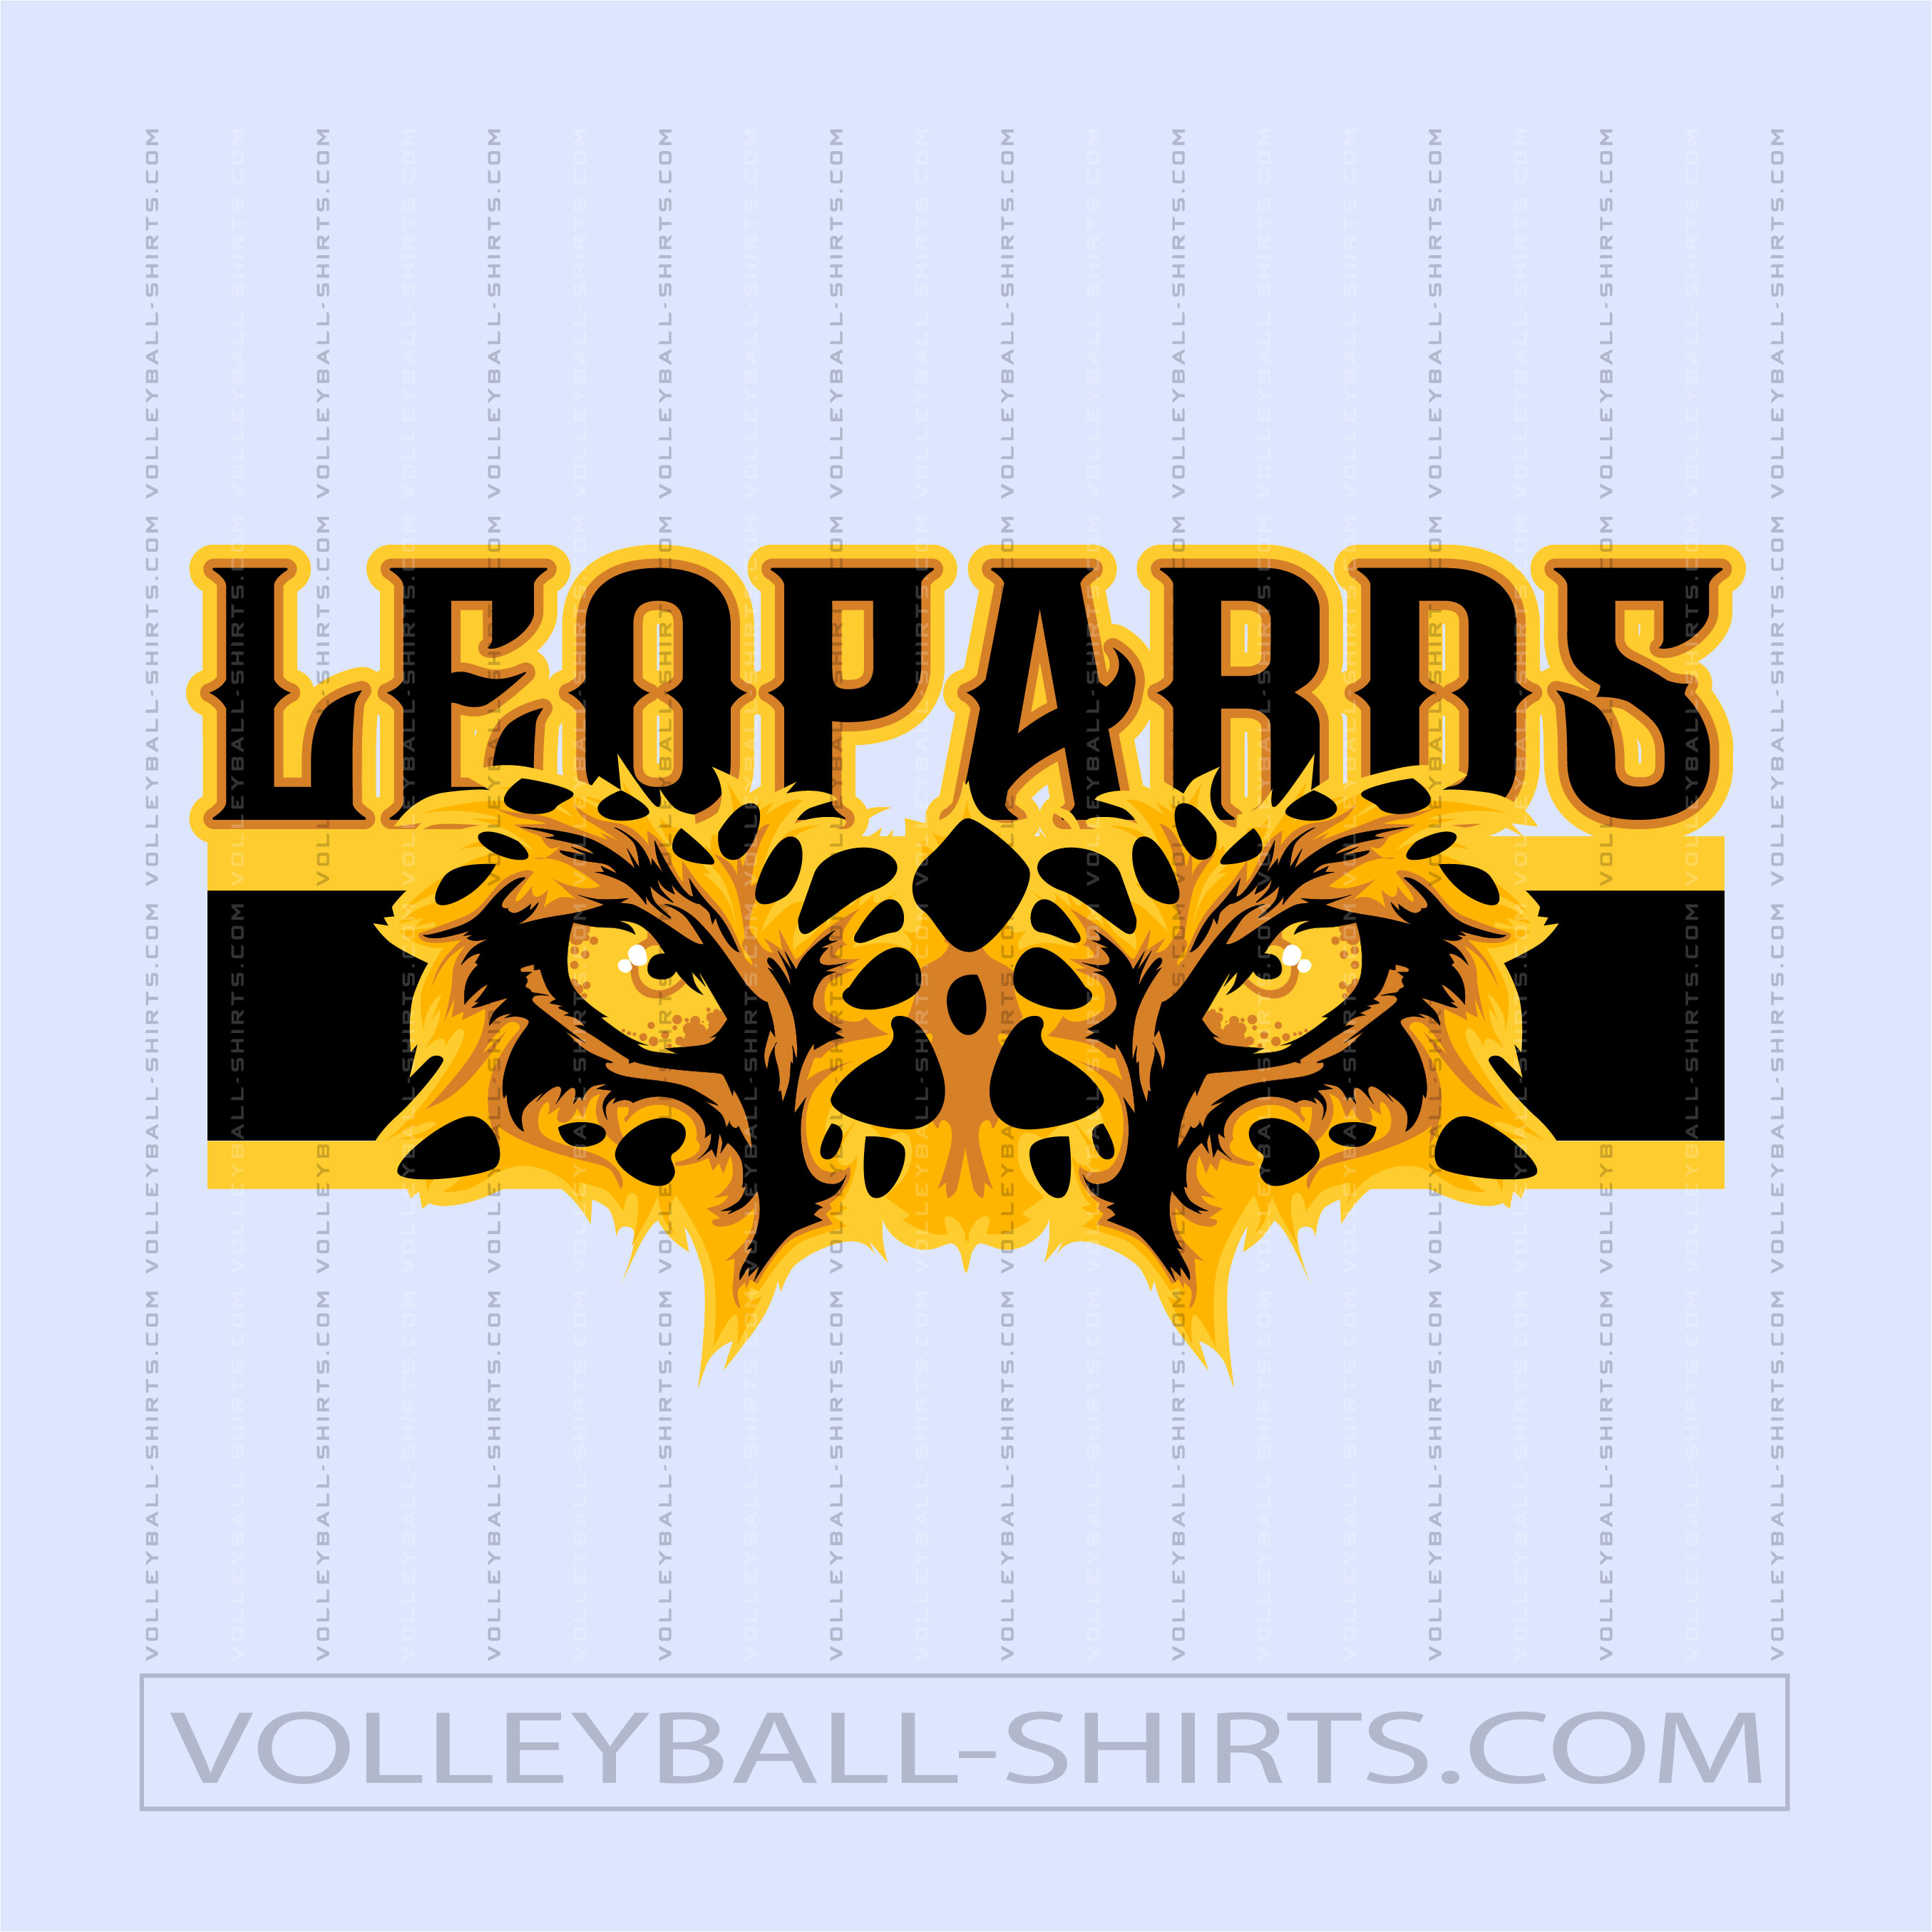 Leopards Volleyball Team Logo